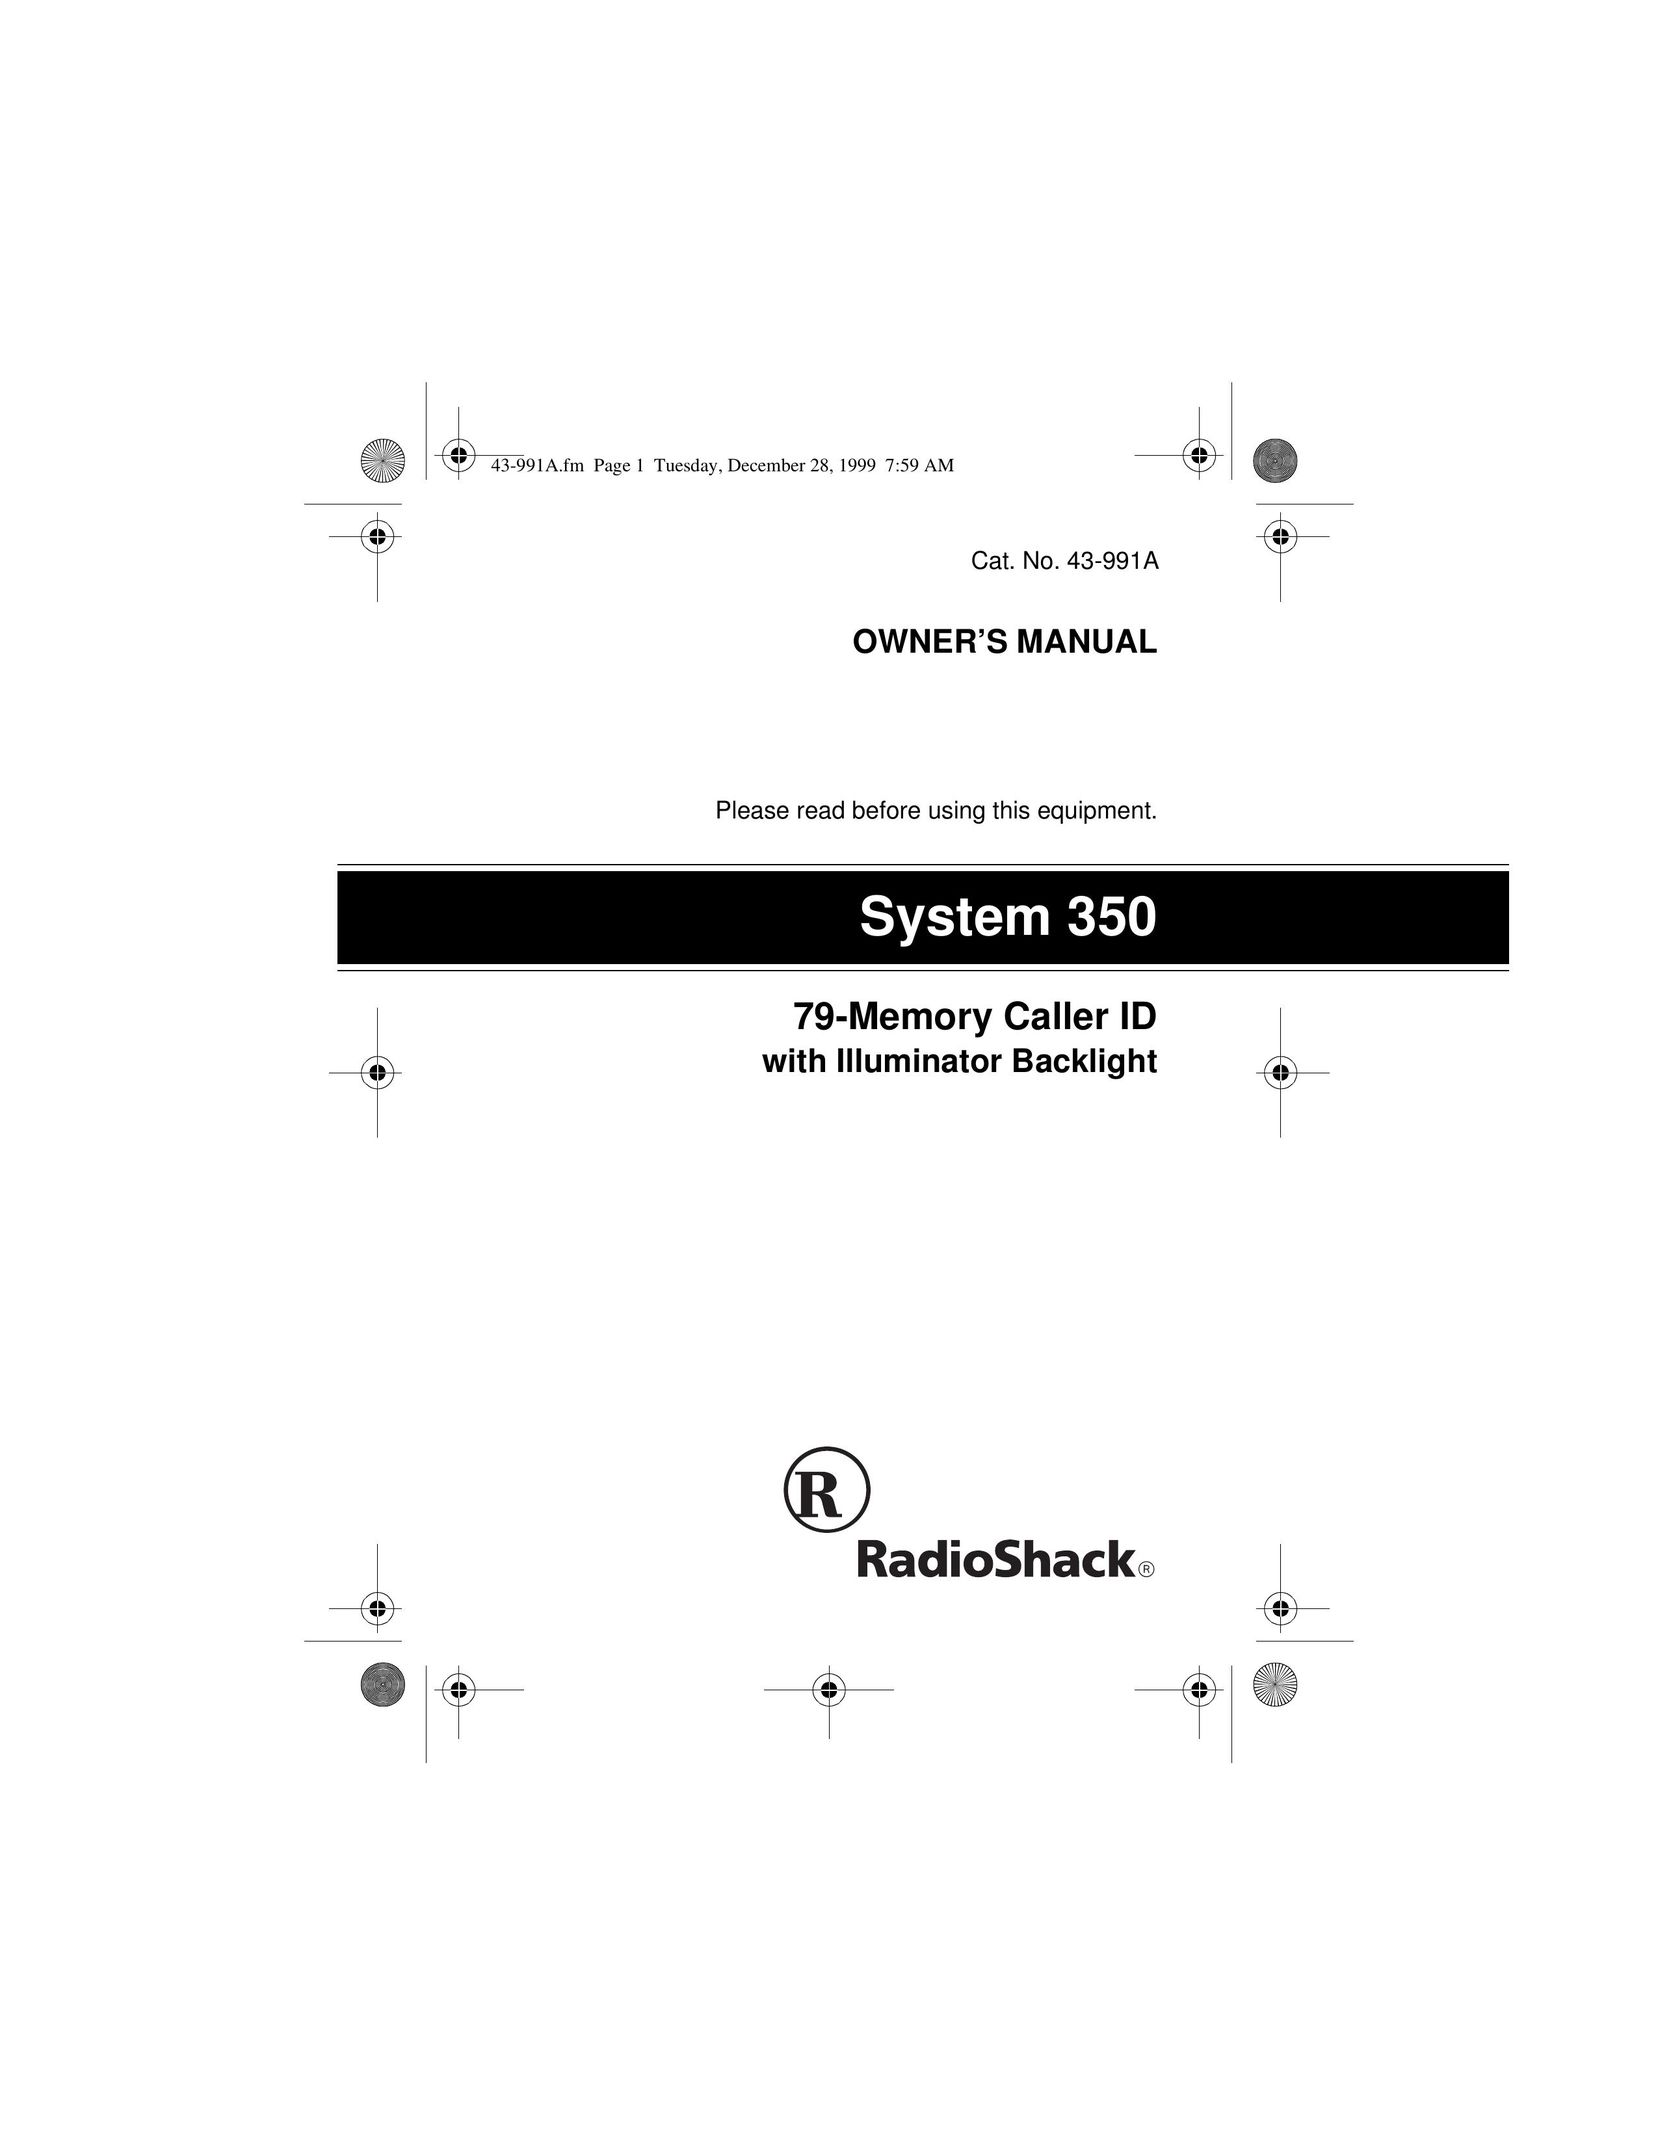 Radio Shack System 350 Telephone User Manual